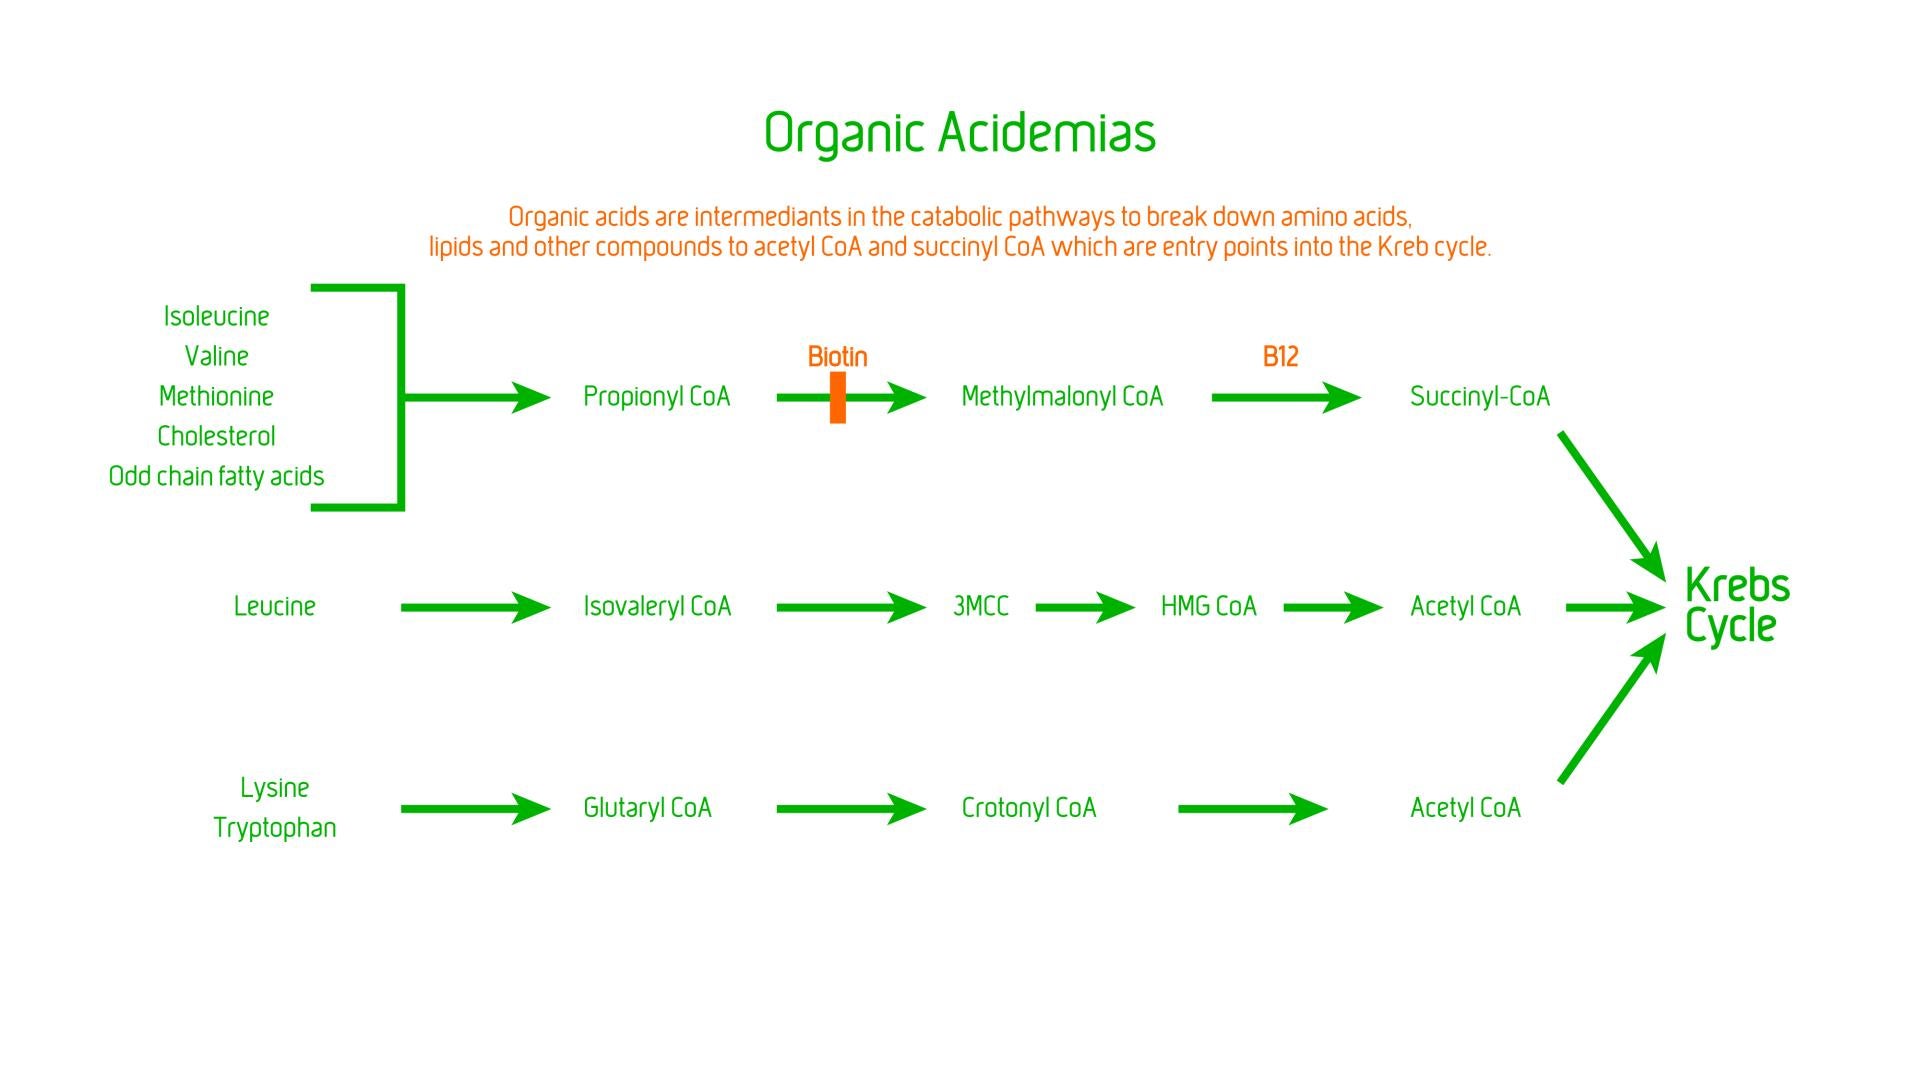 Organic Acidemias (Acidurias)